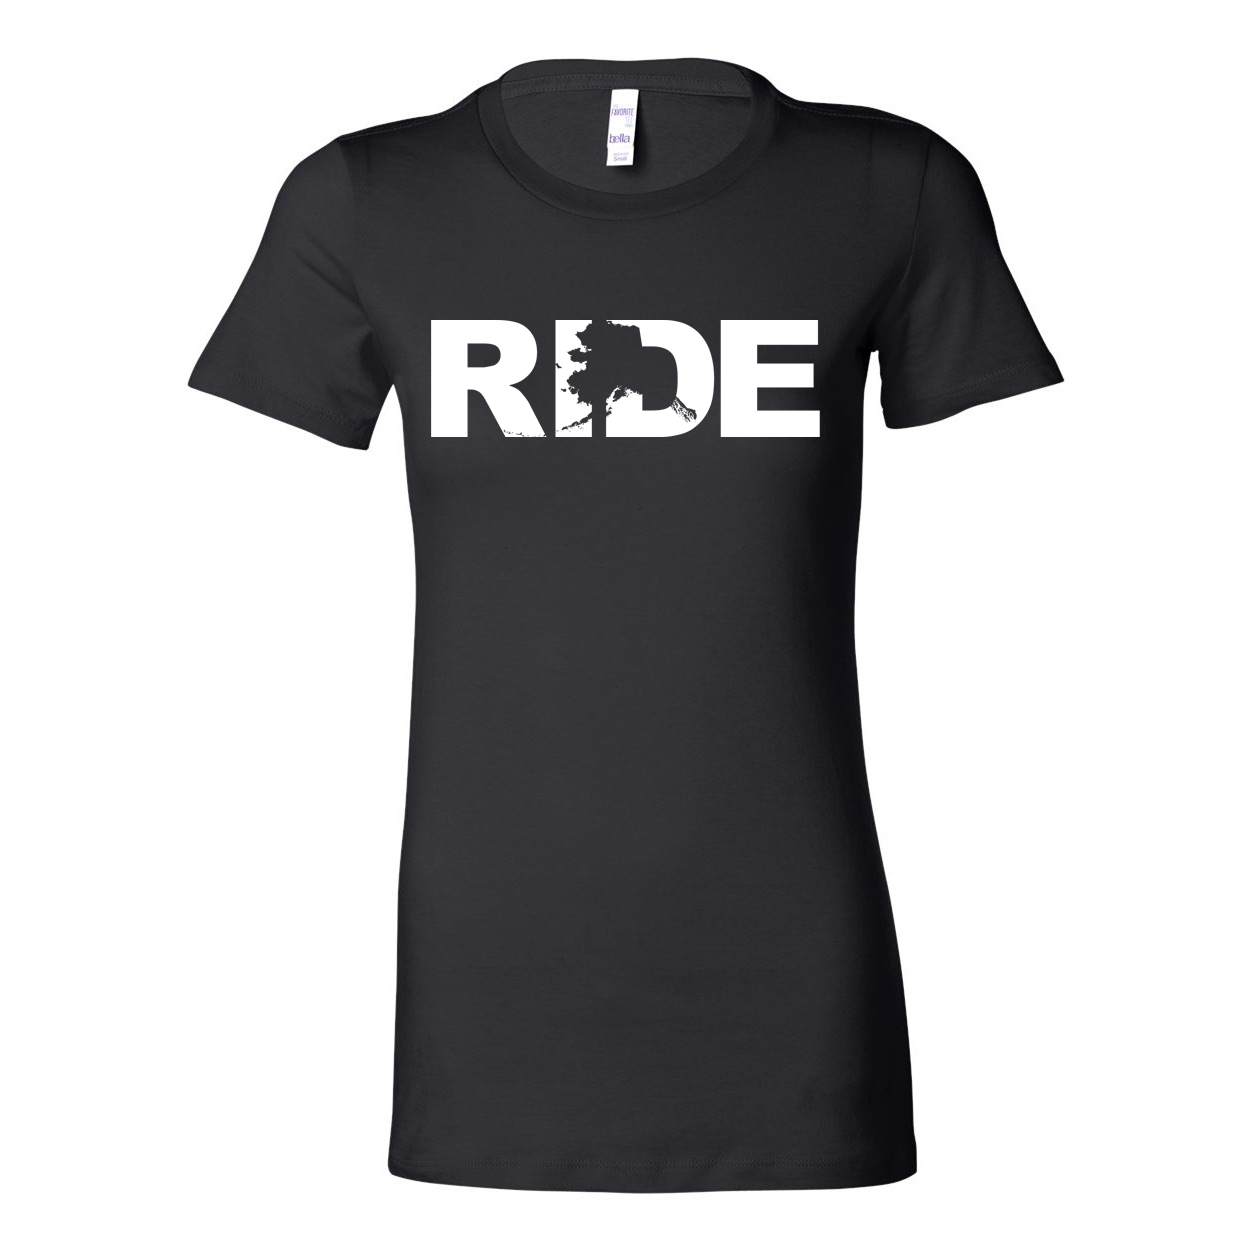 Ride Alaska Classic Women's Fitted Tri-Blend T-Shirt Black (White Logo)